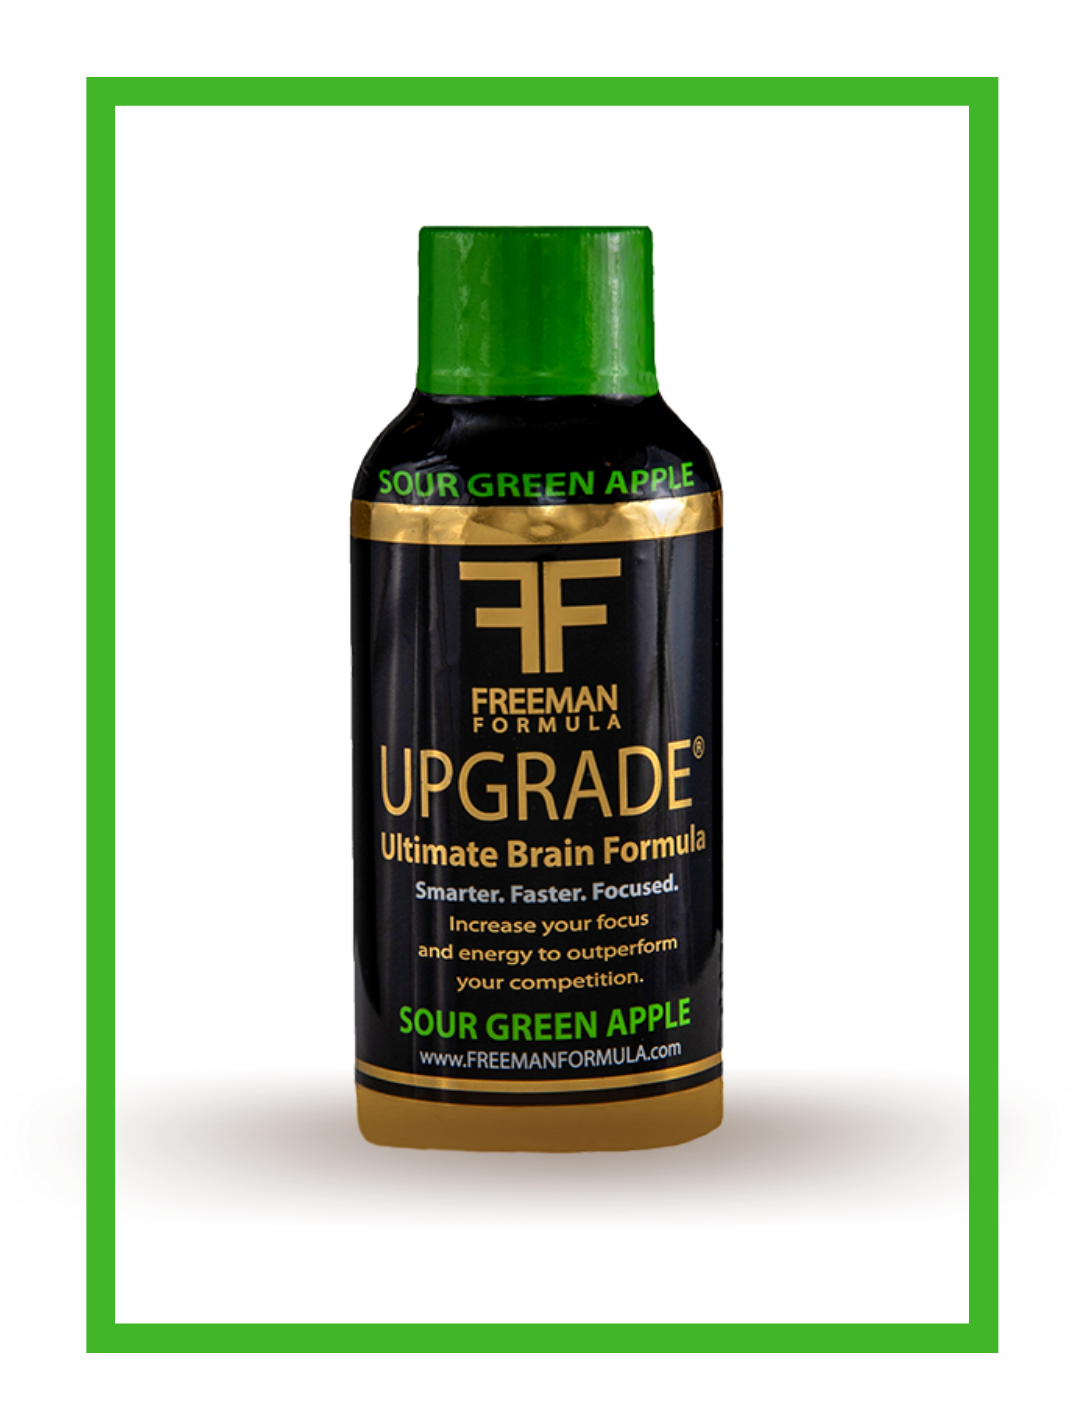 Sour Green Apple 12-Pack | UPGRADE - Ultimate Brain Energy Formula